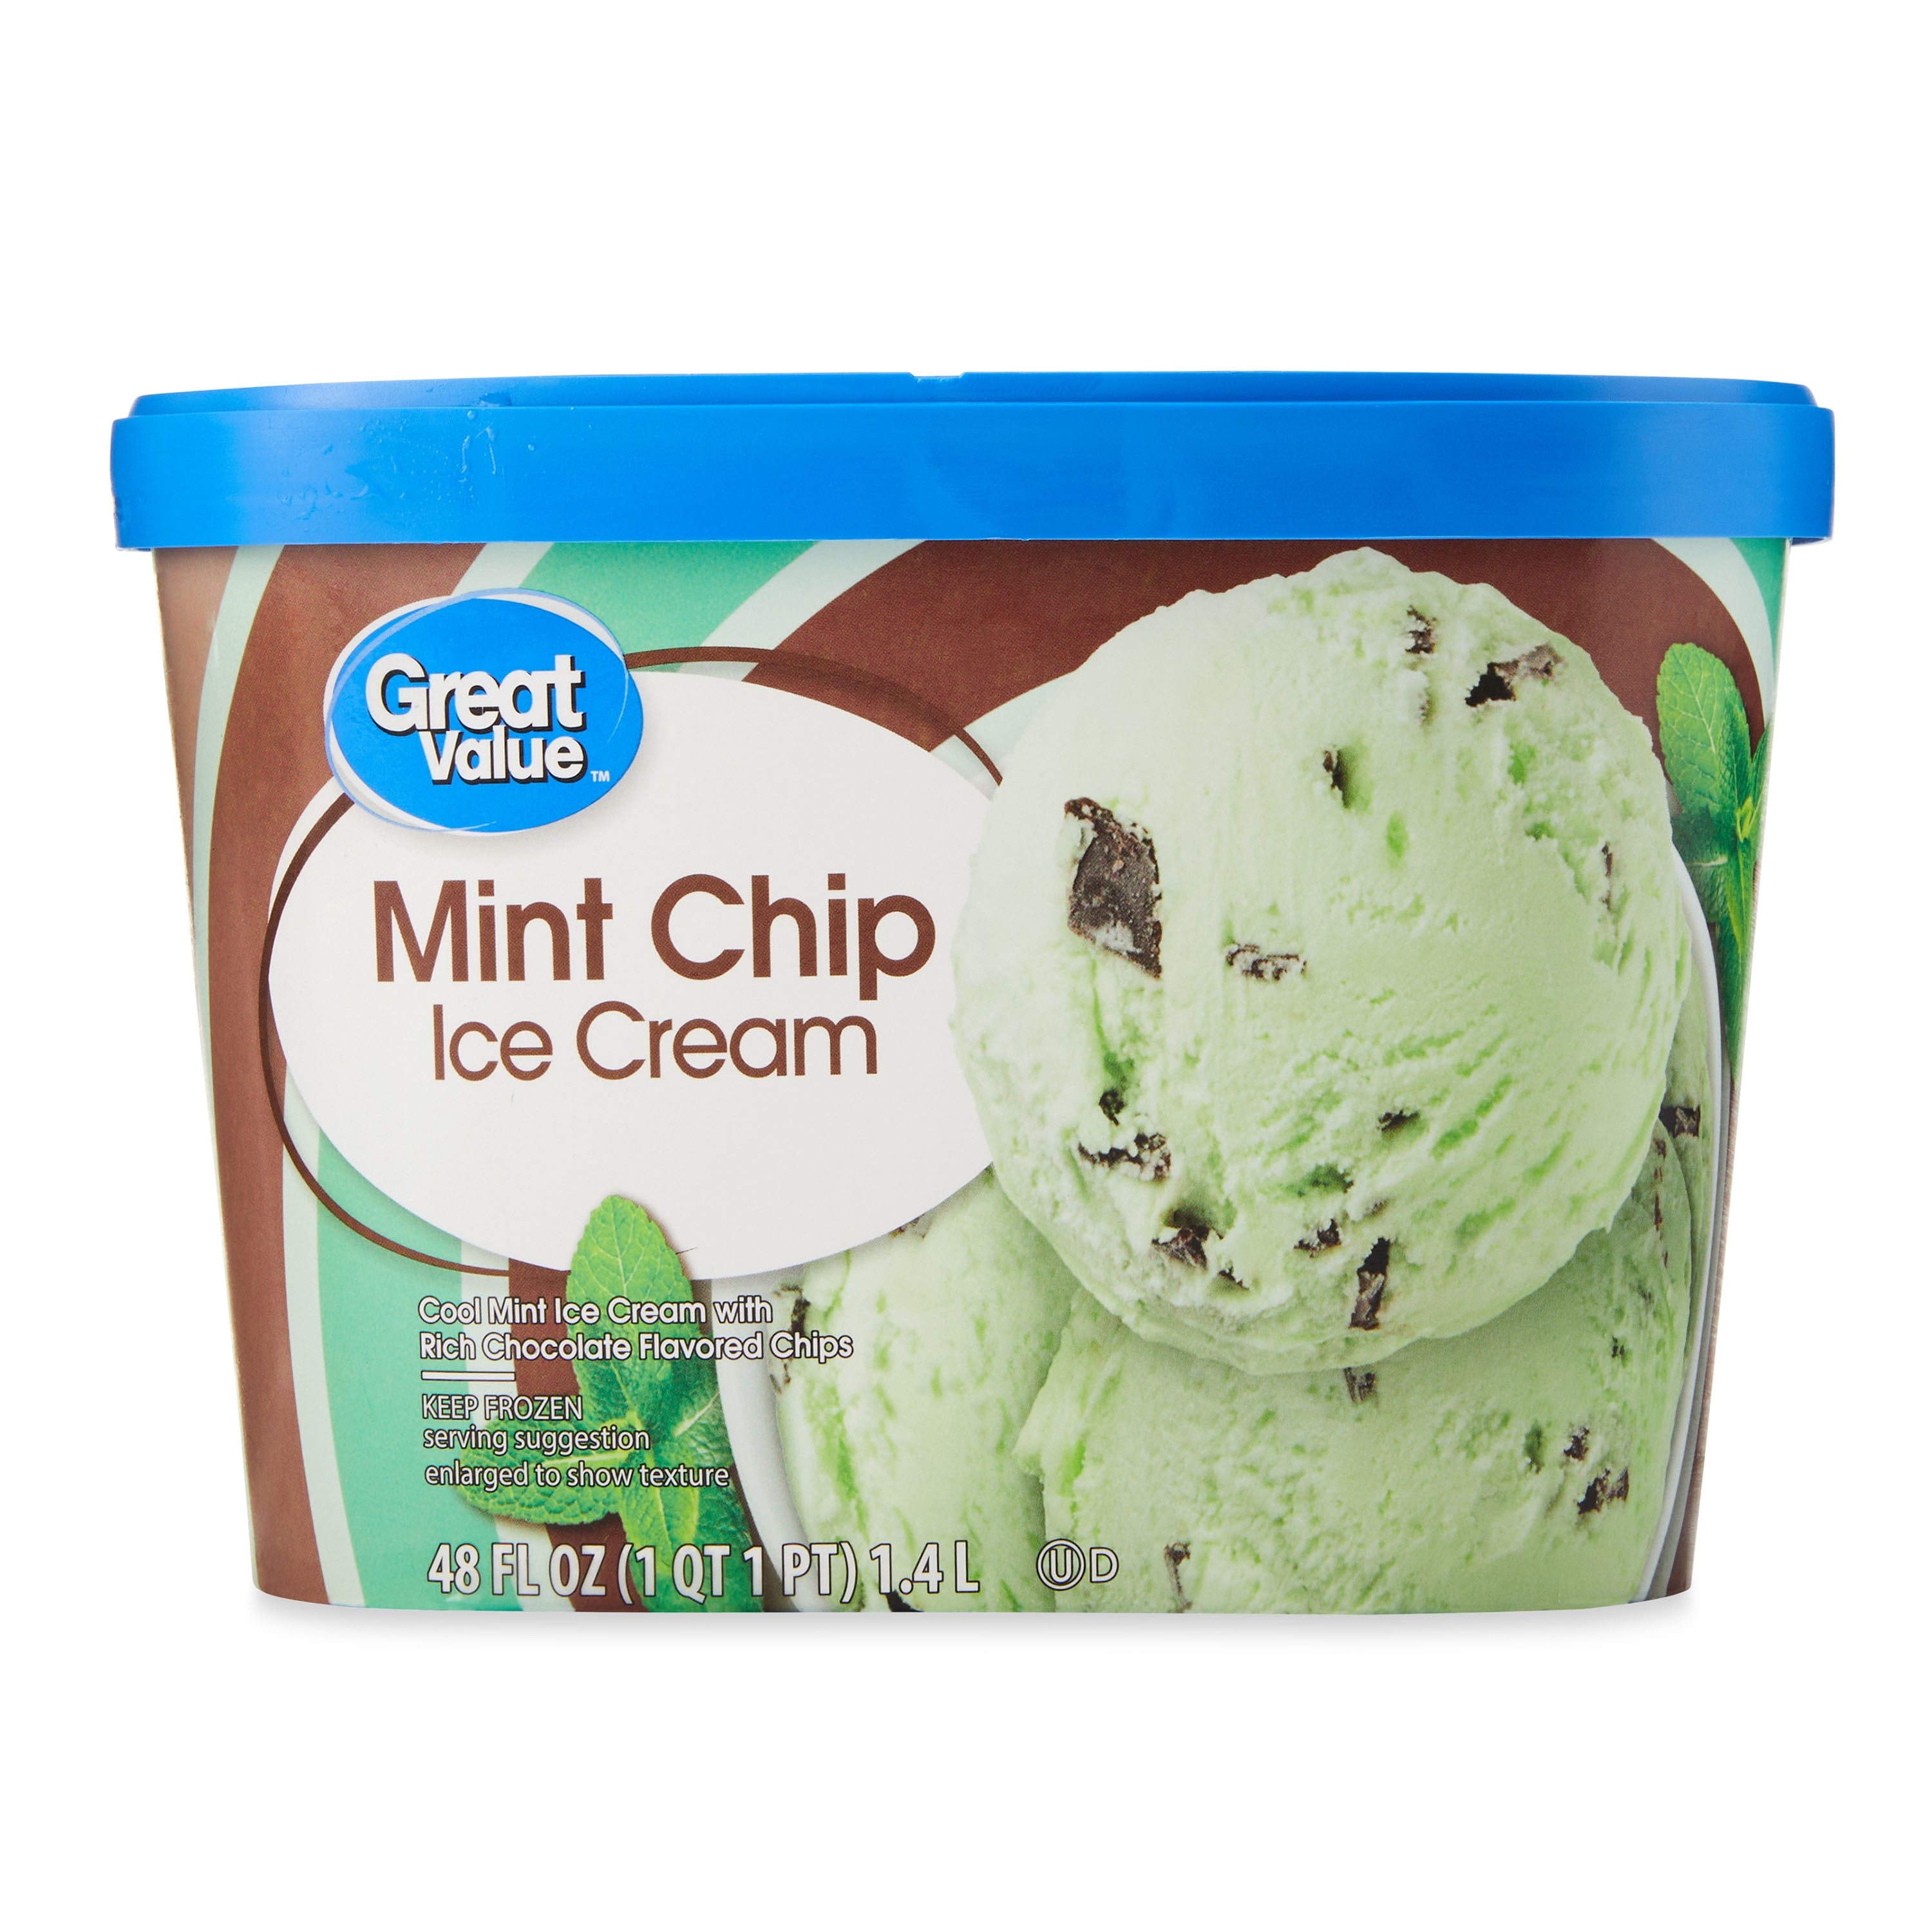 Great Value Mint Chip Ice Cream, 48 fl oz